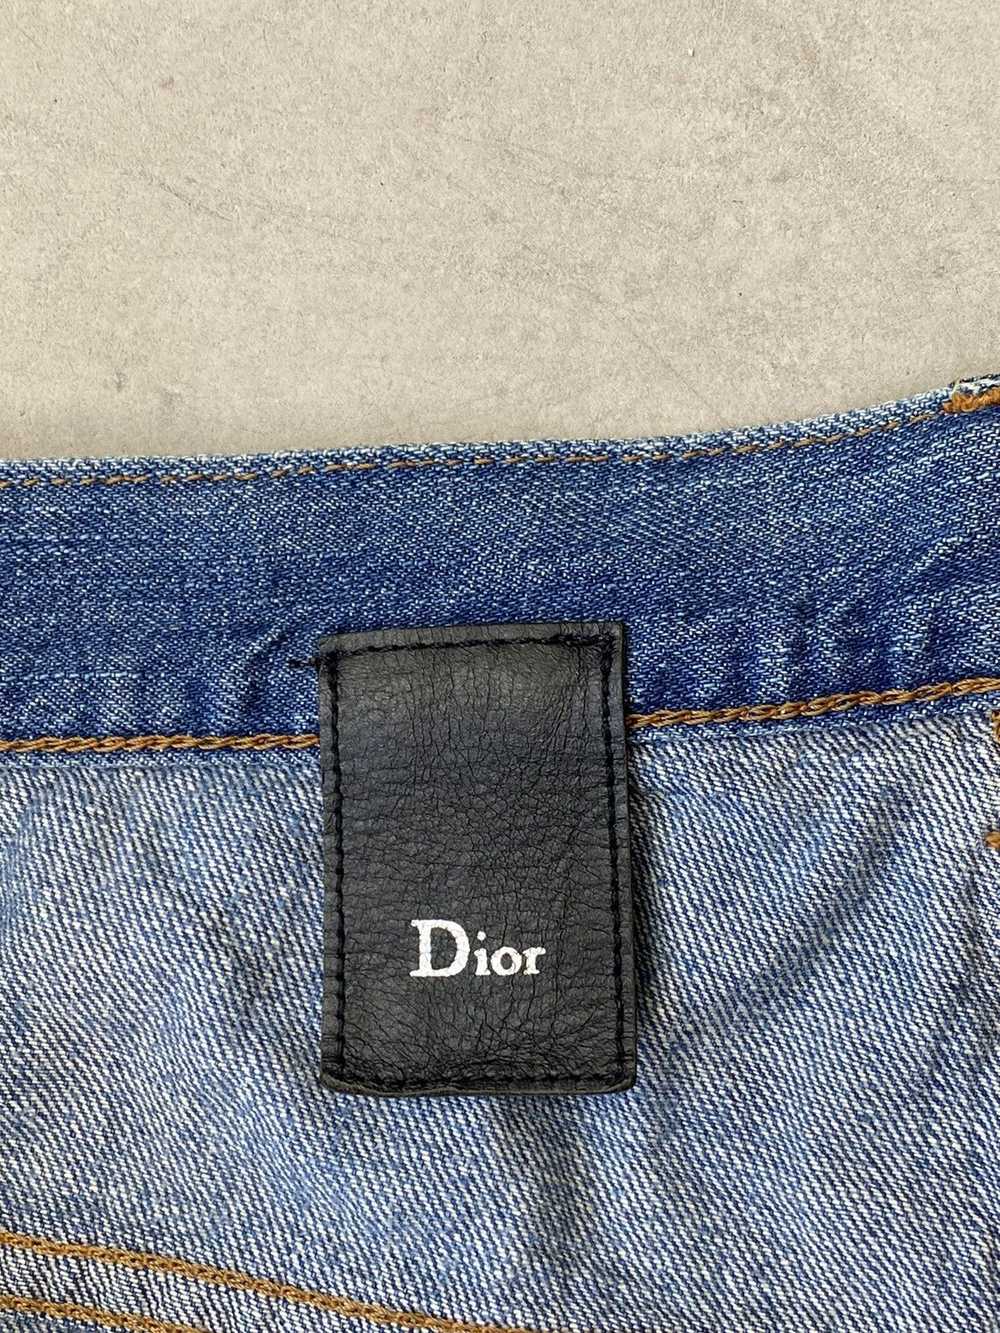 Dior Dior Denim Jeans - image 8